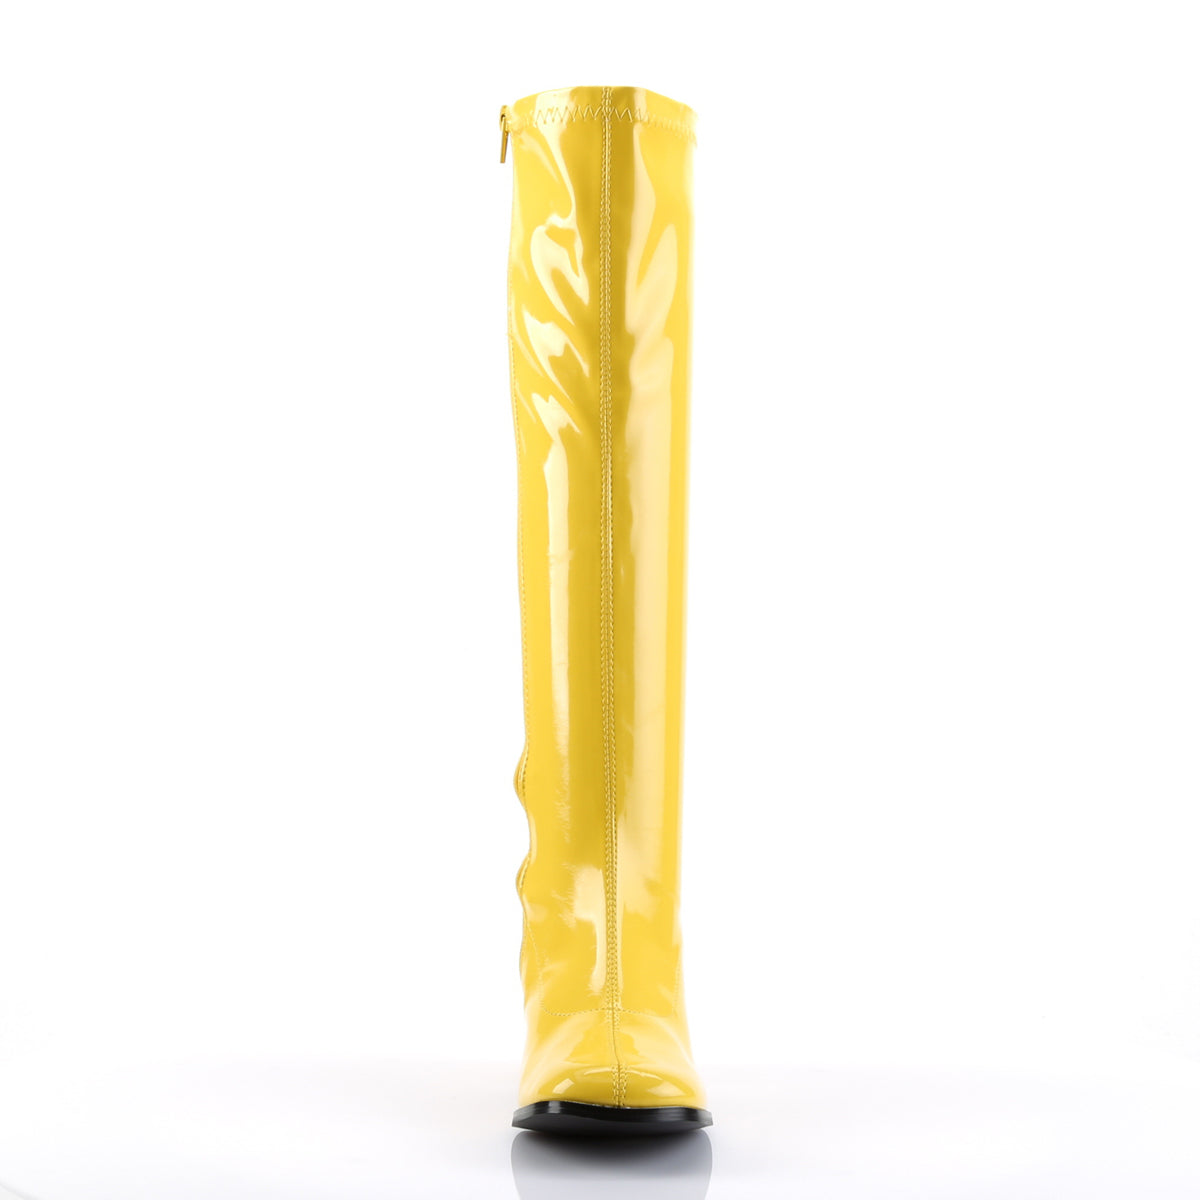 GOGO-300 Funtasma Fantasy Yellow Stretch Patent Women's Boots [Retro Knee High Boots]